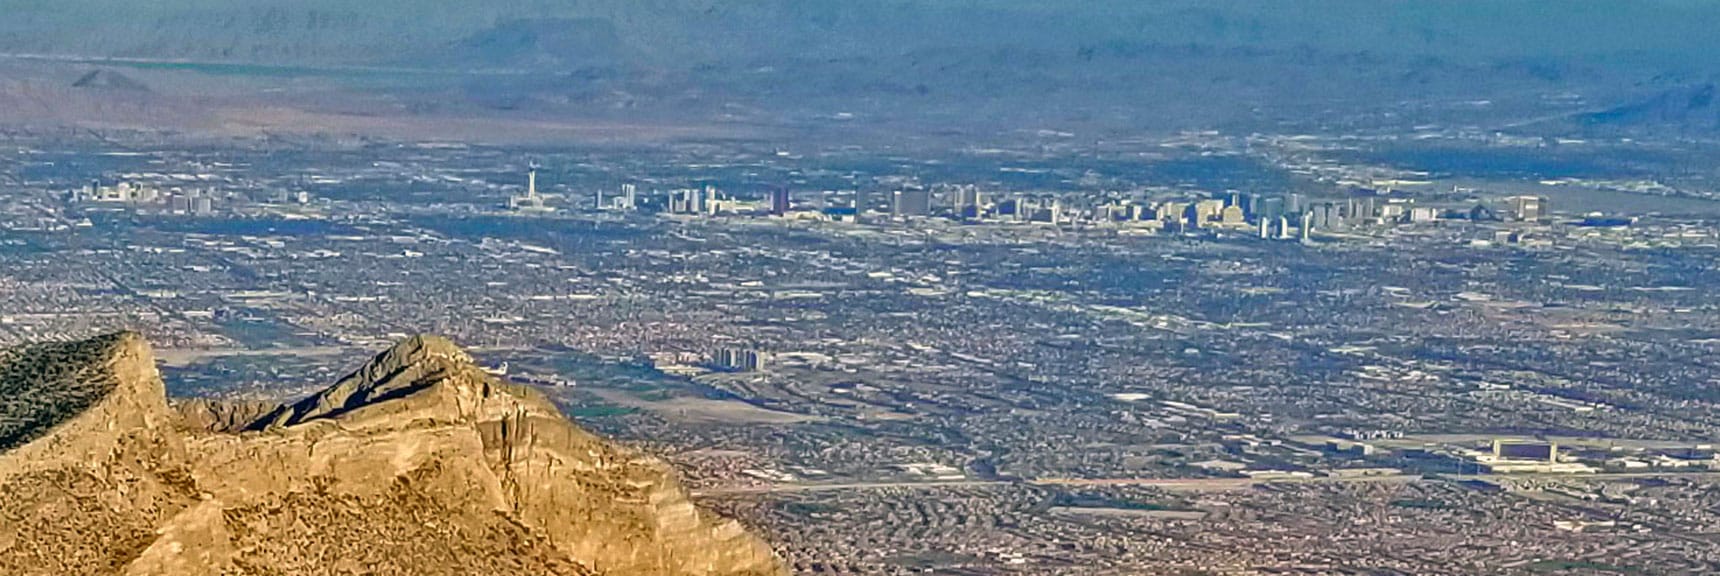 Enlarged View of Las Vegas Strip from El Padre Approach Ridge | La Madre Mountain,, El Padre Mountain, Burnt Peak | La Madre Mountains Wilderness, Nevada